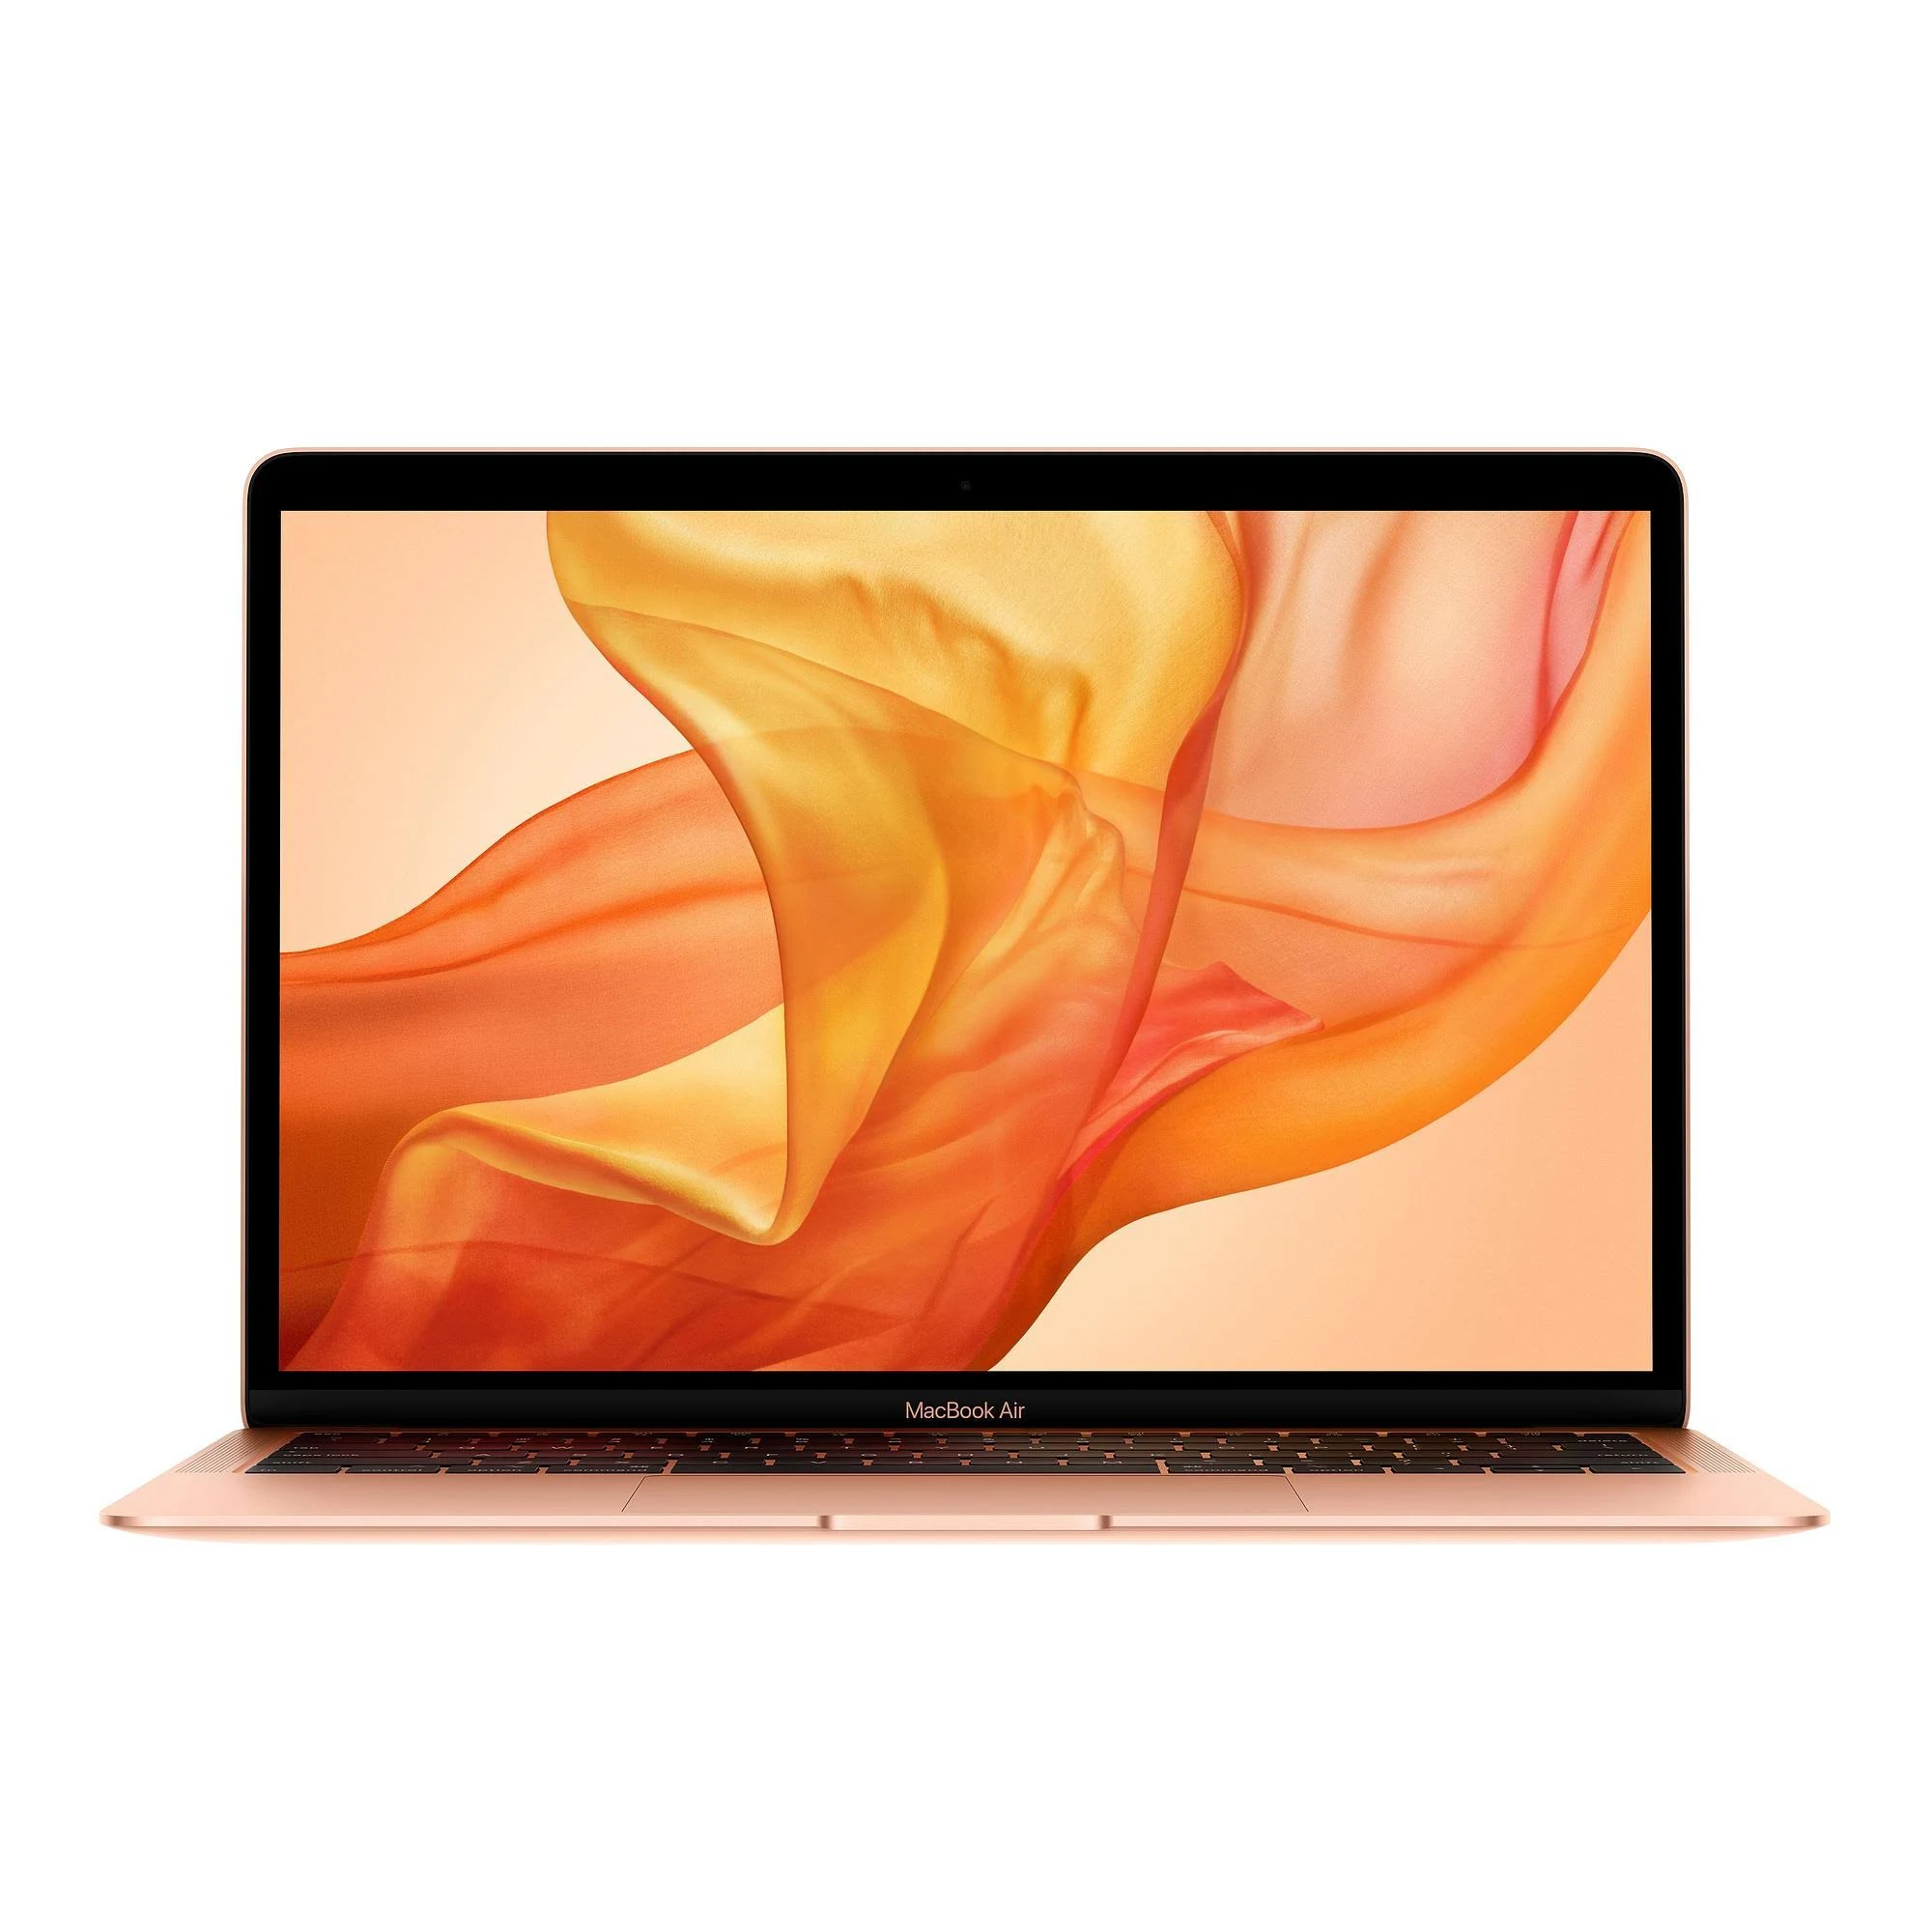 MacBook Air 13 inch True Tone 2019 i5 1.6GHz - 128GB SSD - 8GB Ram 128GB Gold Pristine